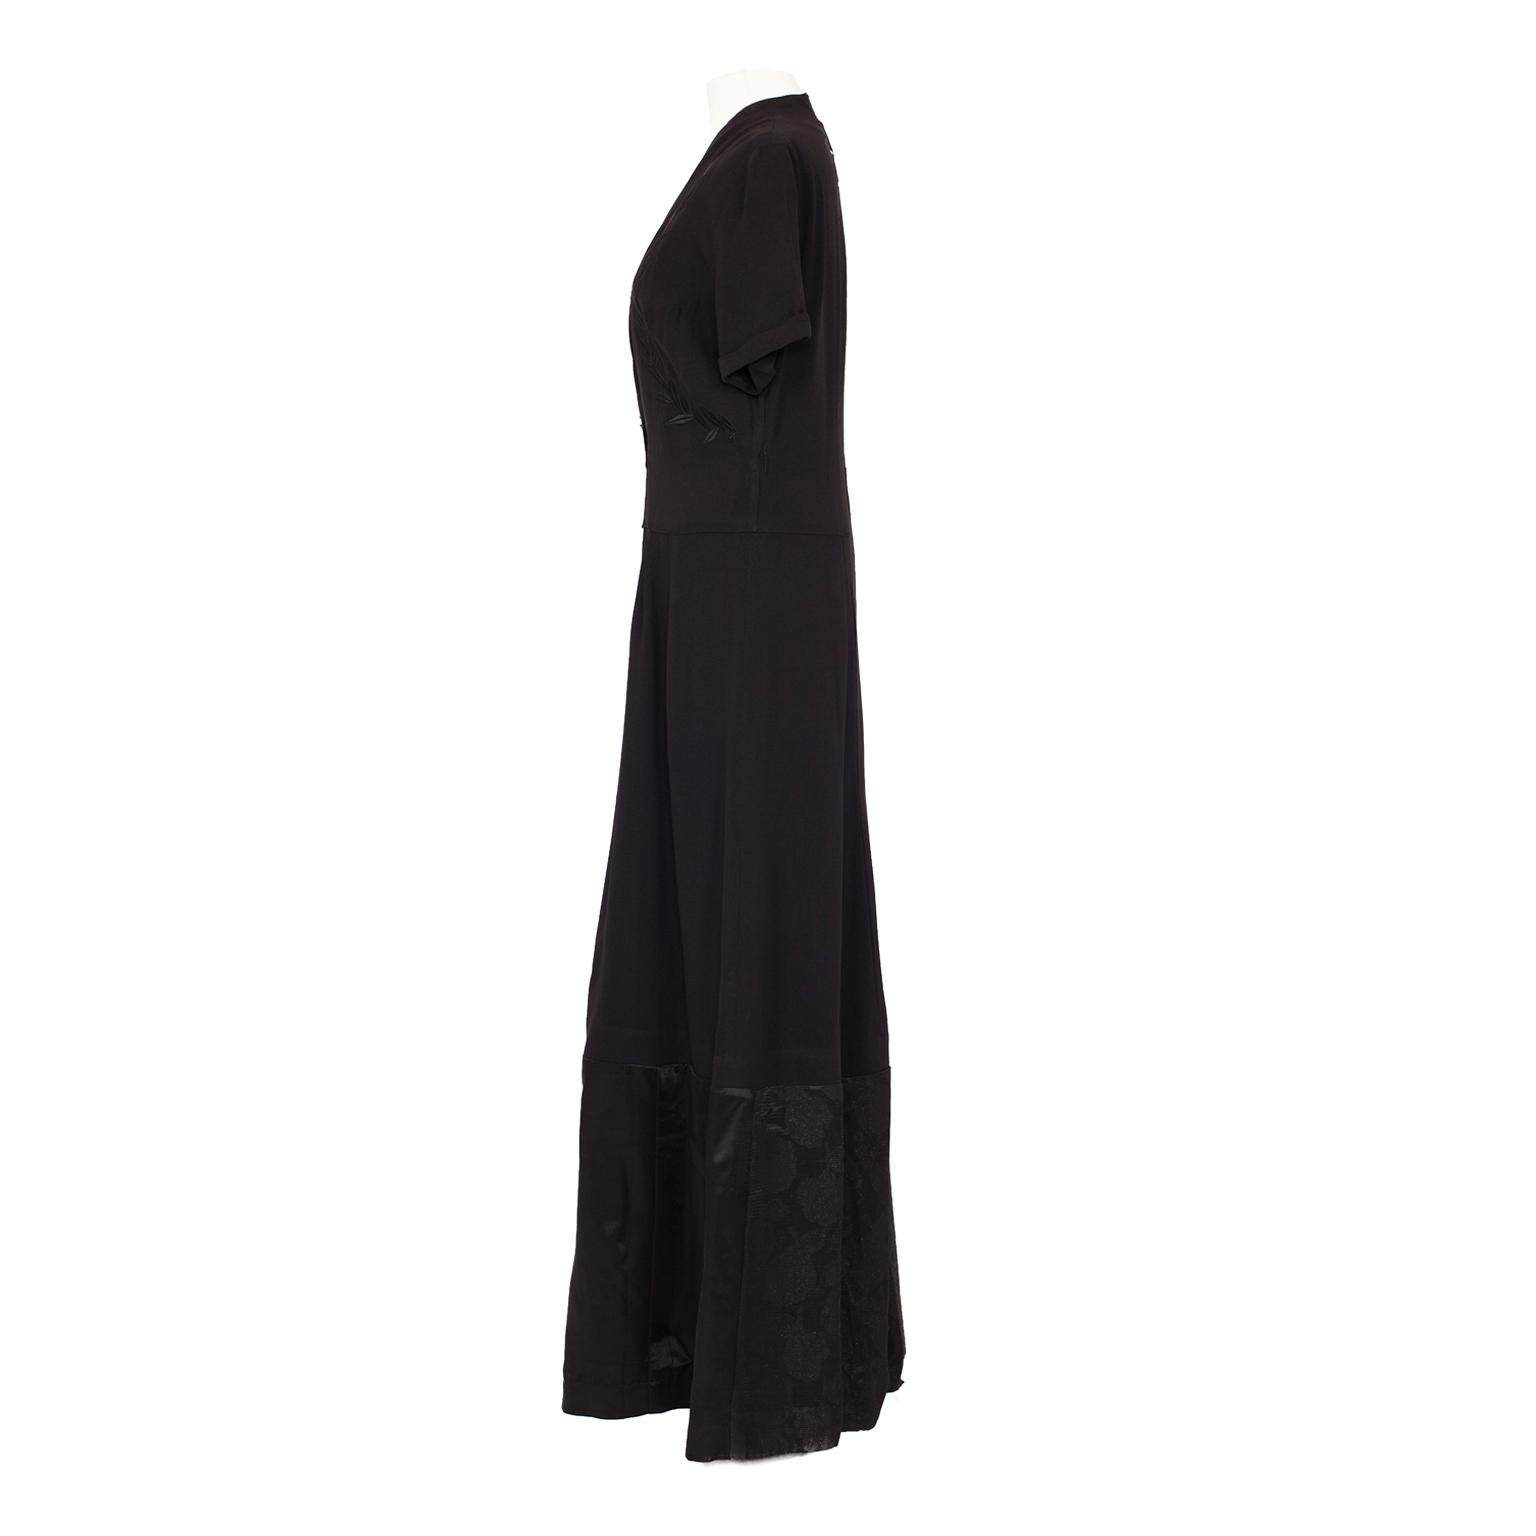 Martin Margiela Artisanal Deconstructed Black Dress, 1993 / SS 1994 3